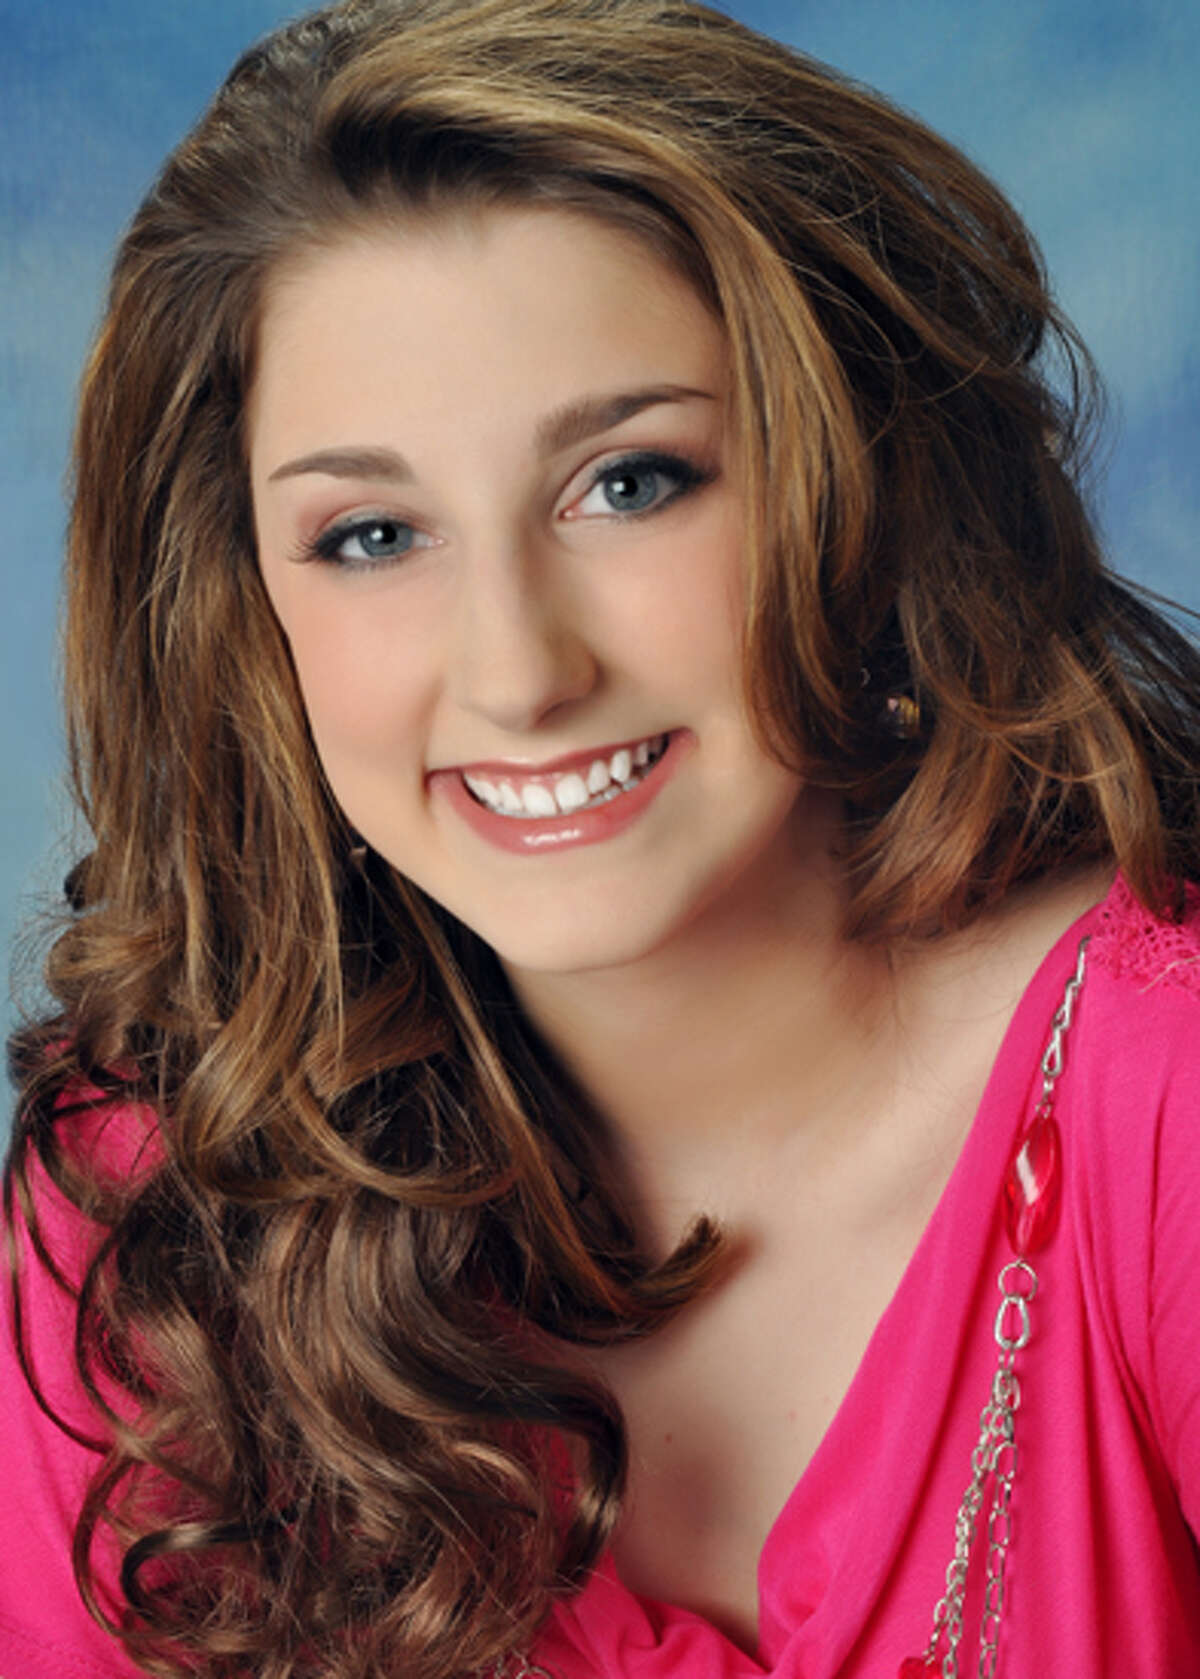 Miss Teen Texas 2011 contestants